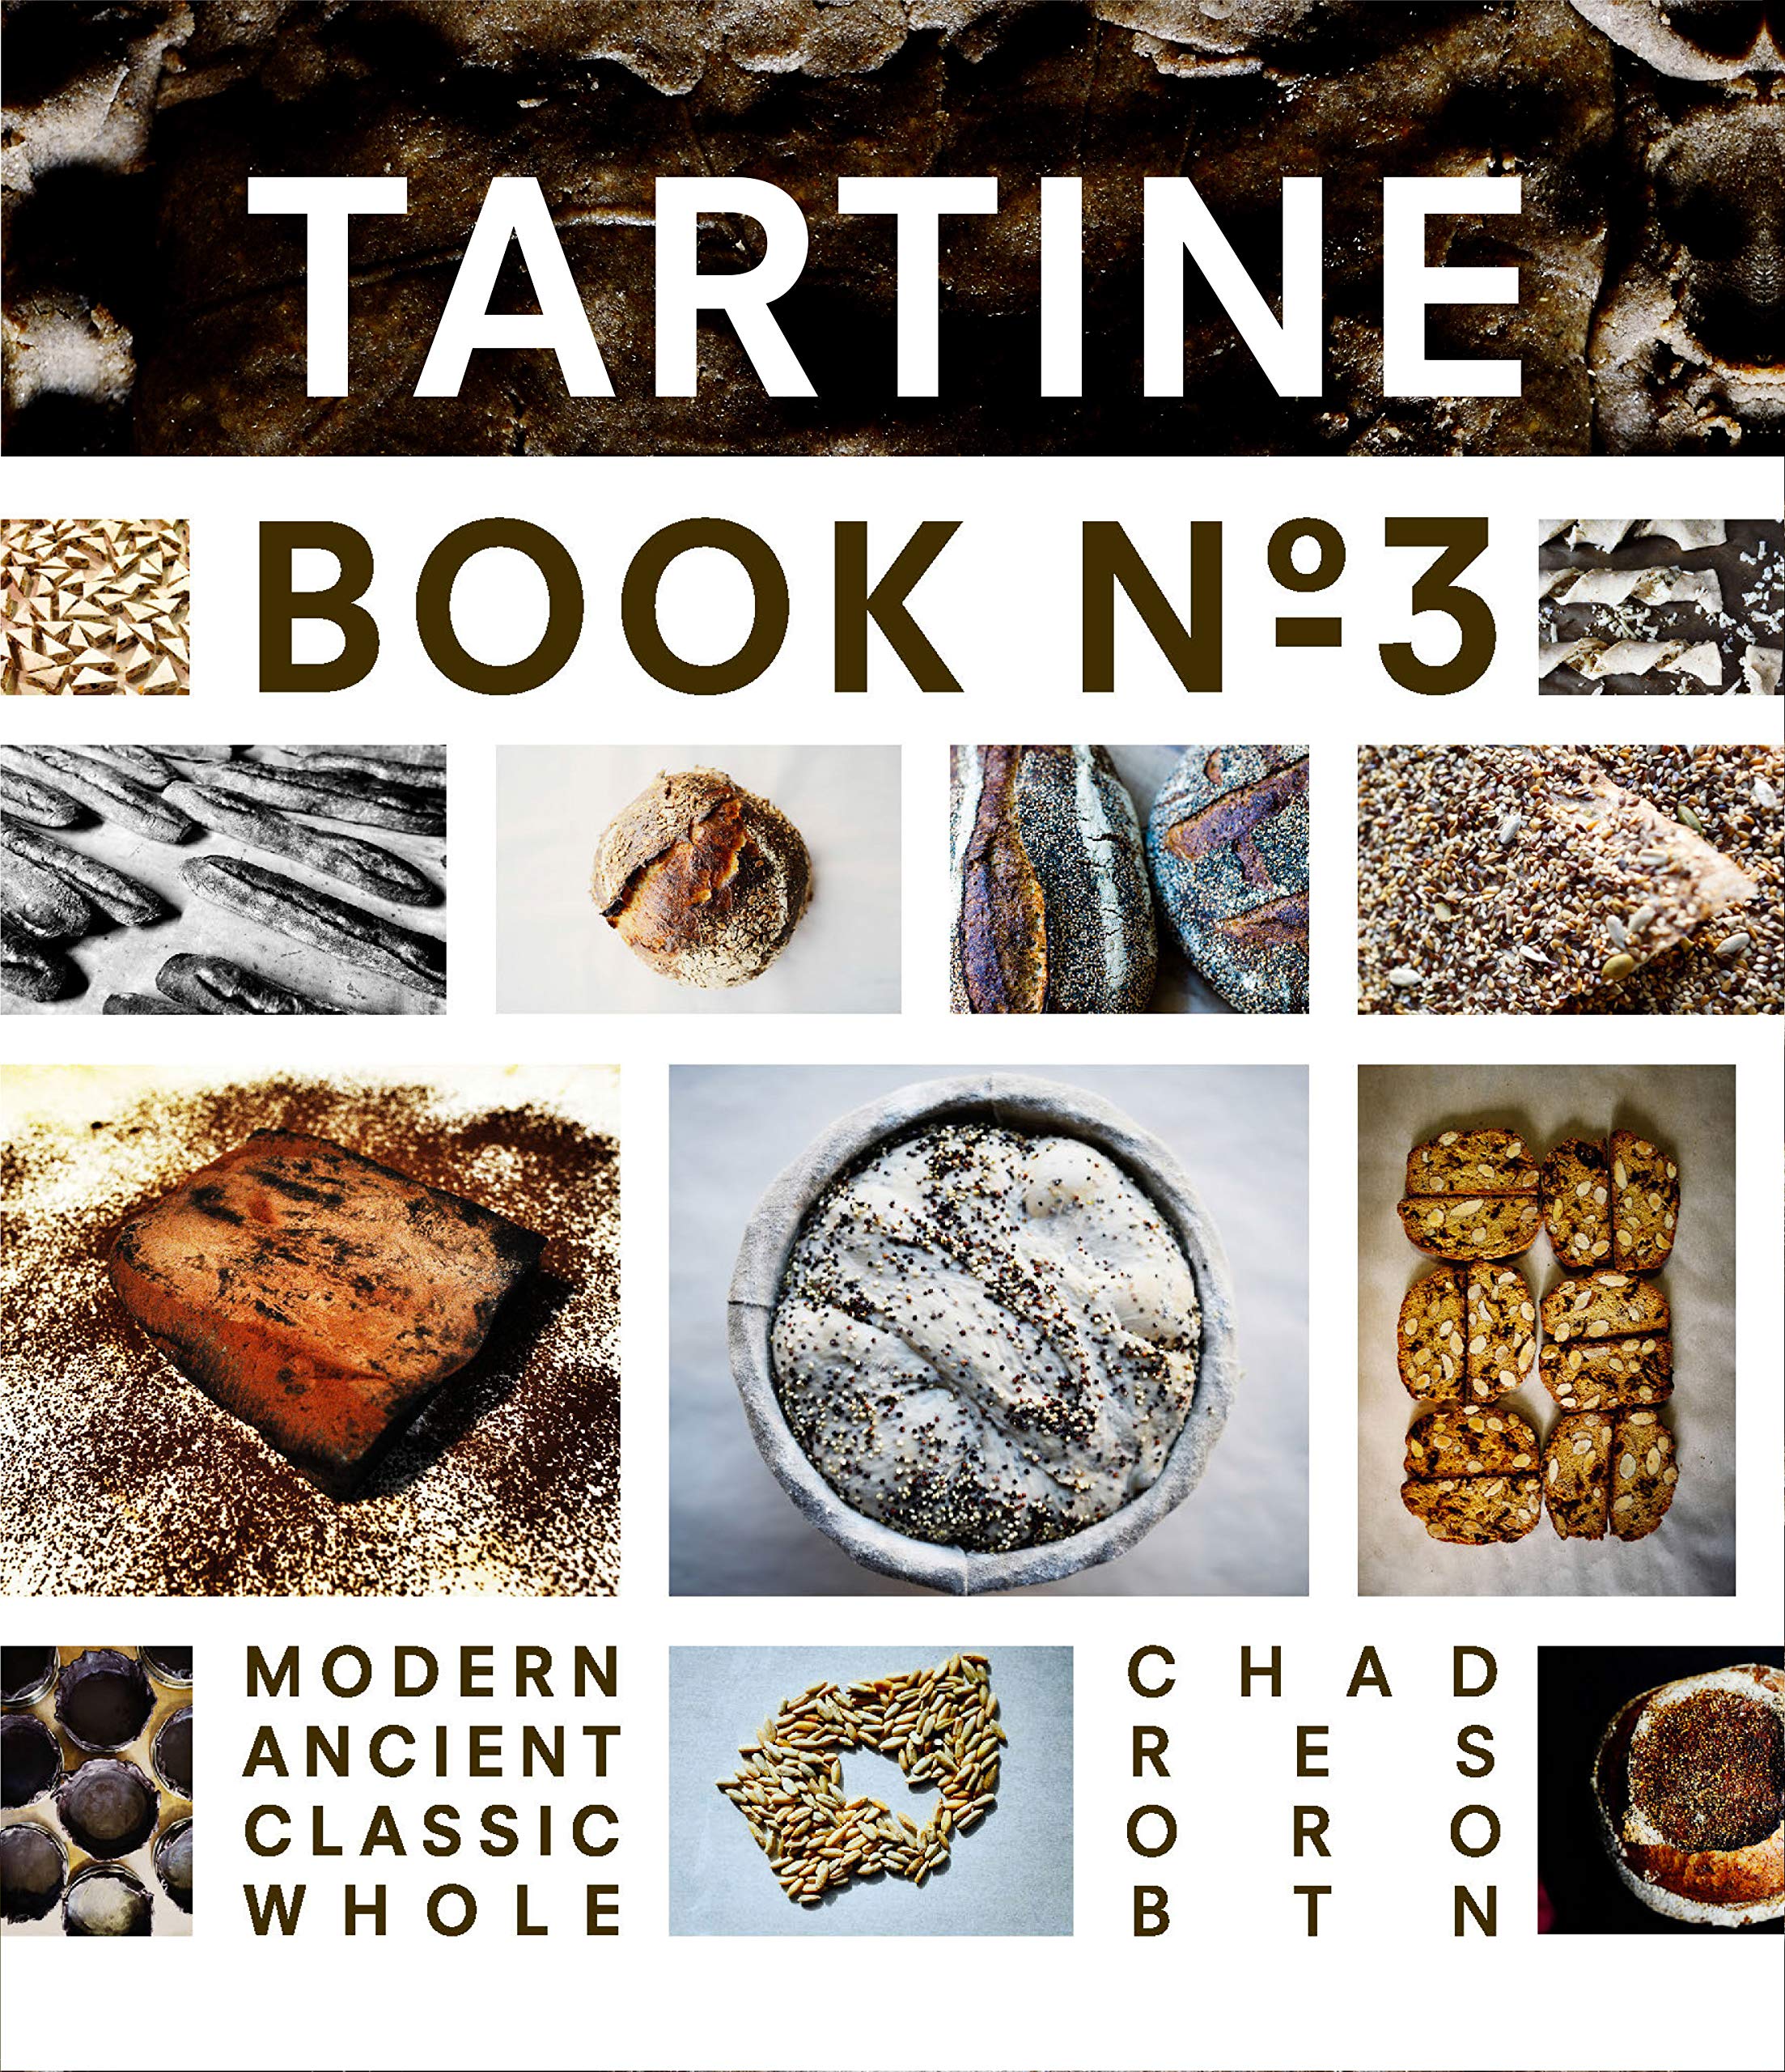 Tartine Book No. 3 | Chad Robertson